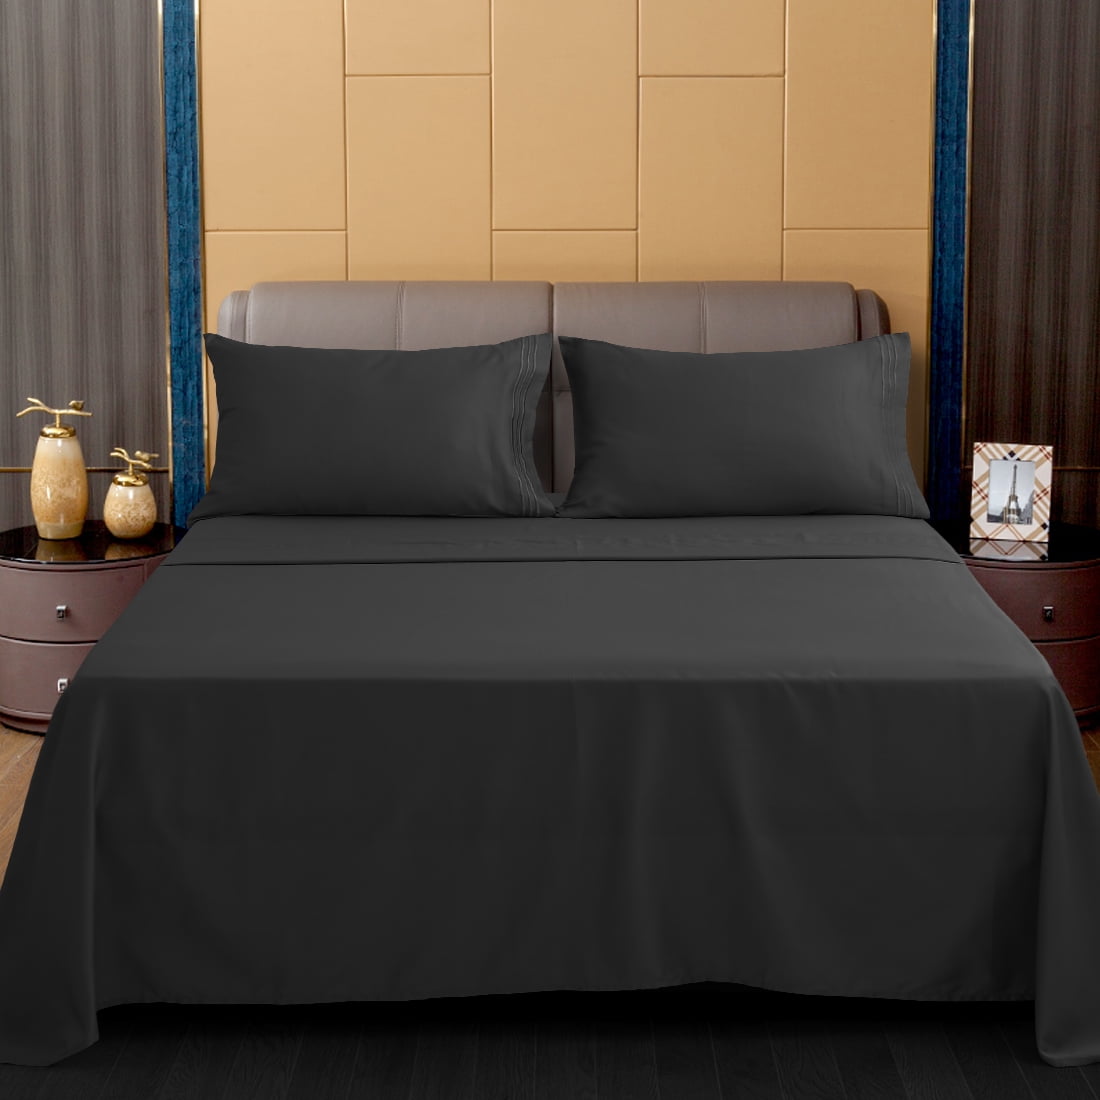 Details about   Luxury 4 PCs Water Bed Sheet Set 1000tc Egyptian Cotton Multi Colors Queen Size 